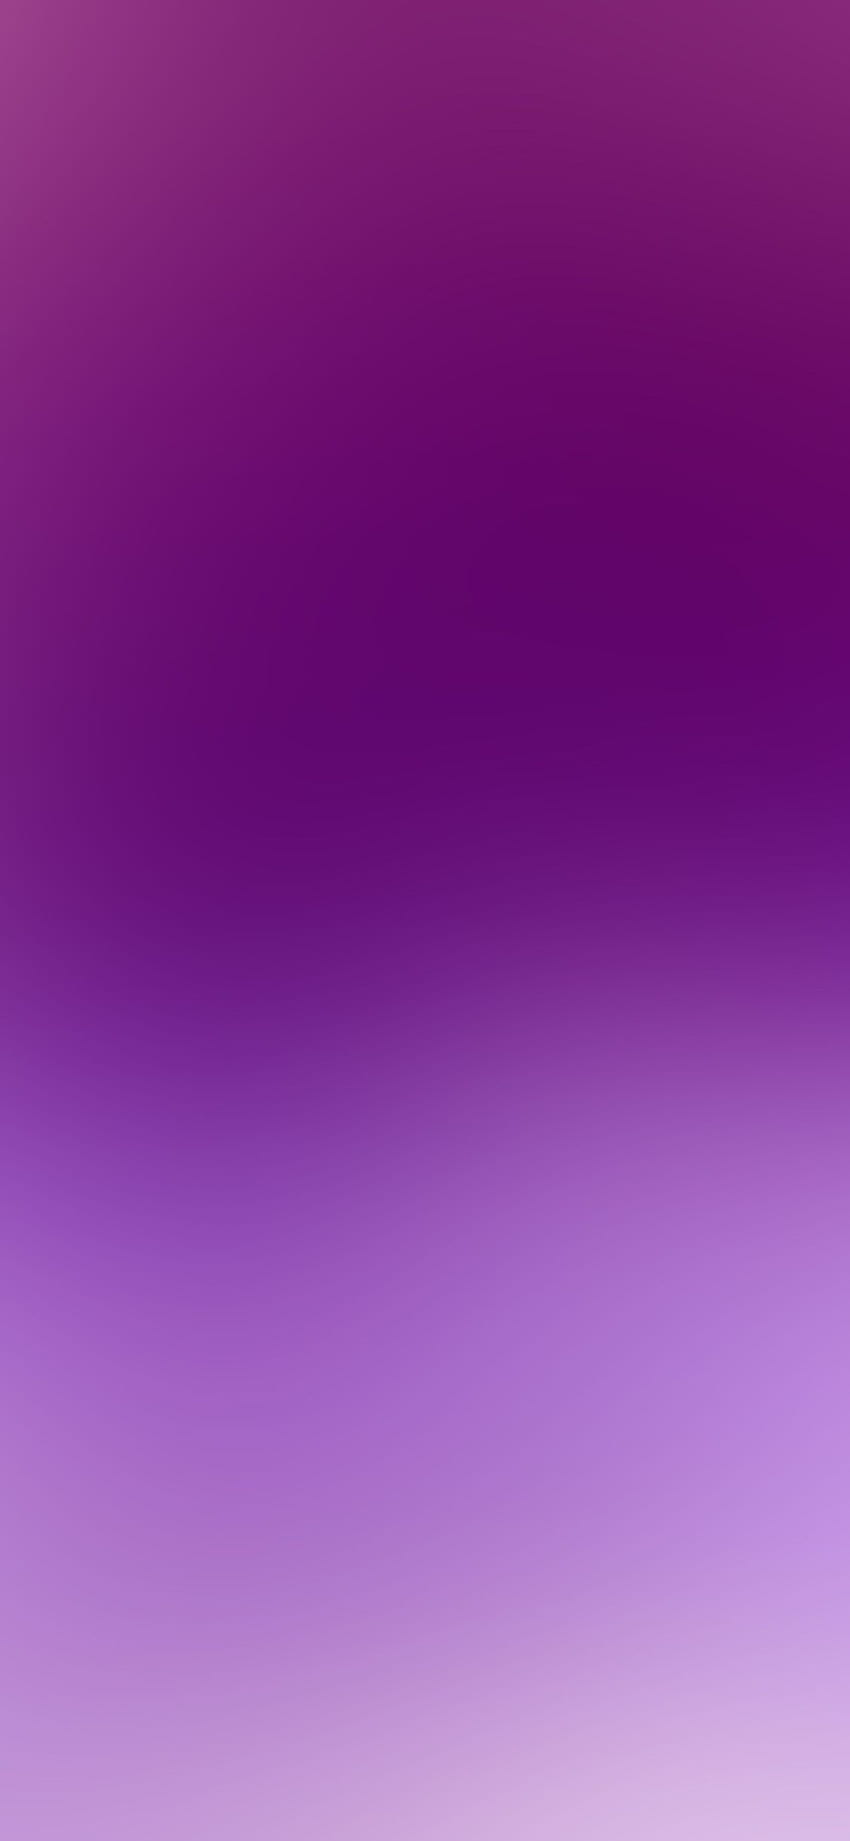 iPhonePapers - desenfoque de gradación de lluvia púrpura fondo de pantalla del teléfono